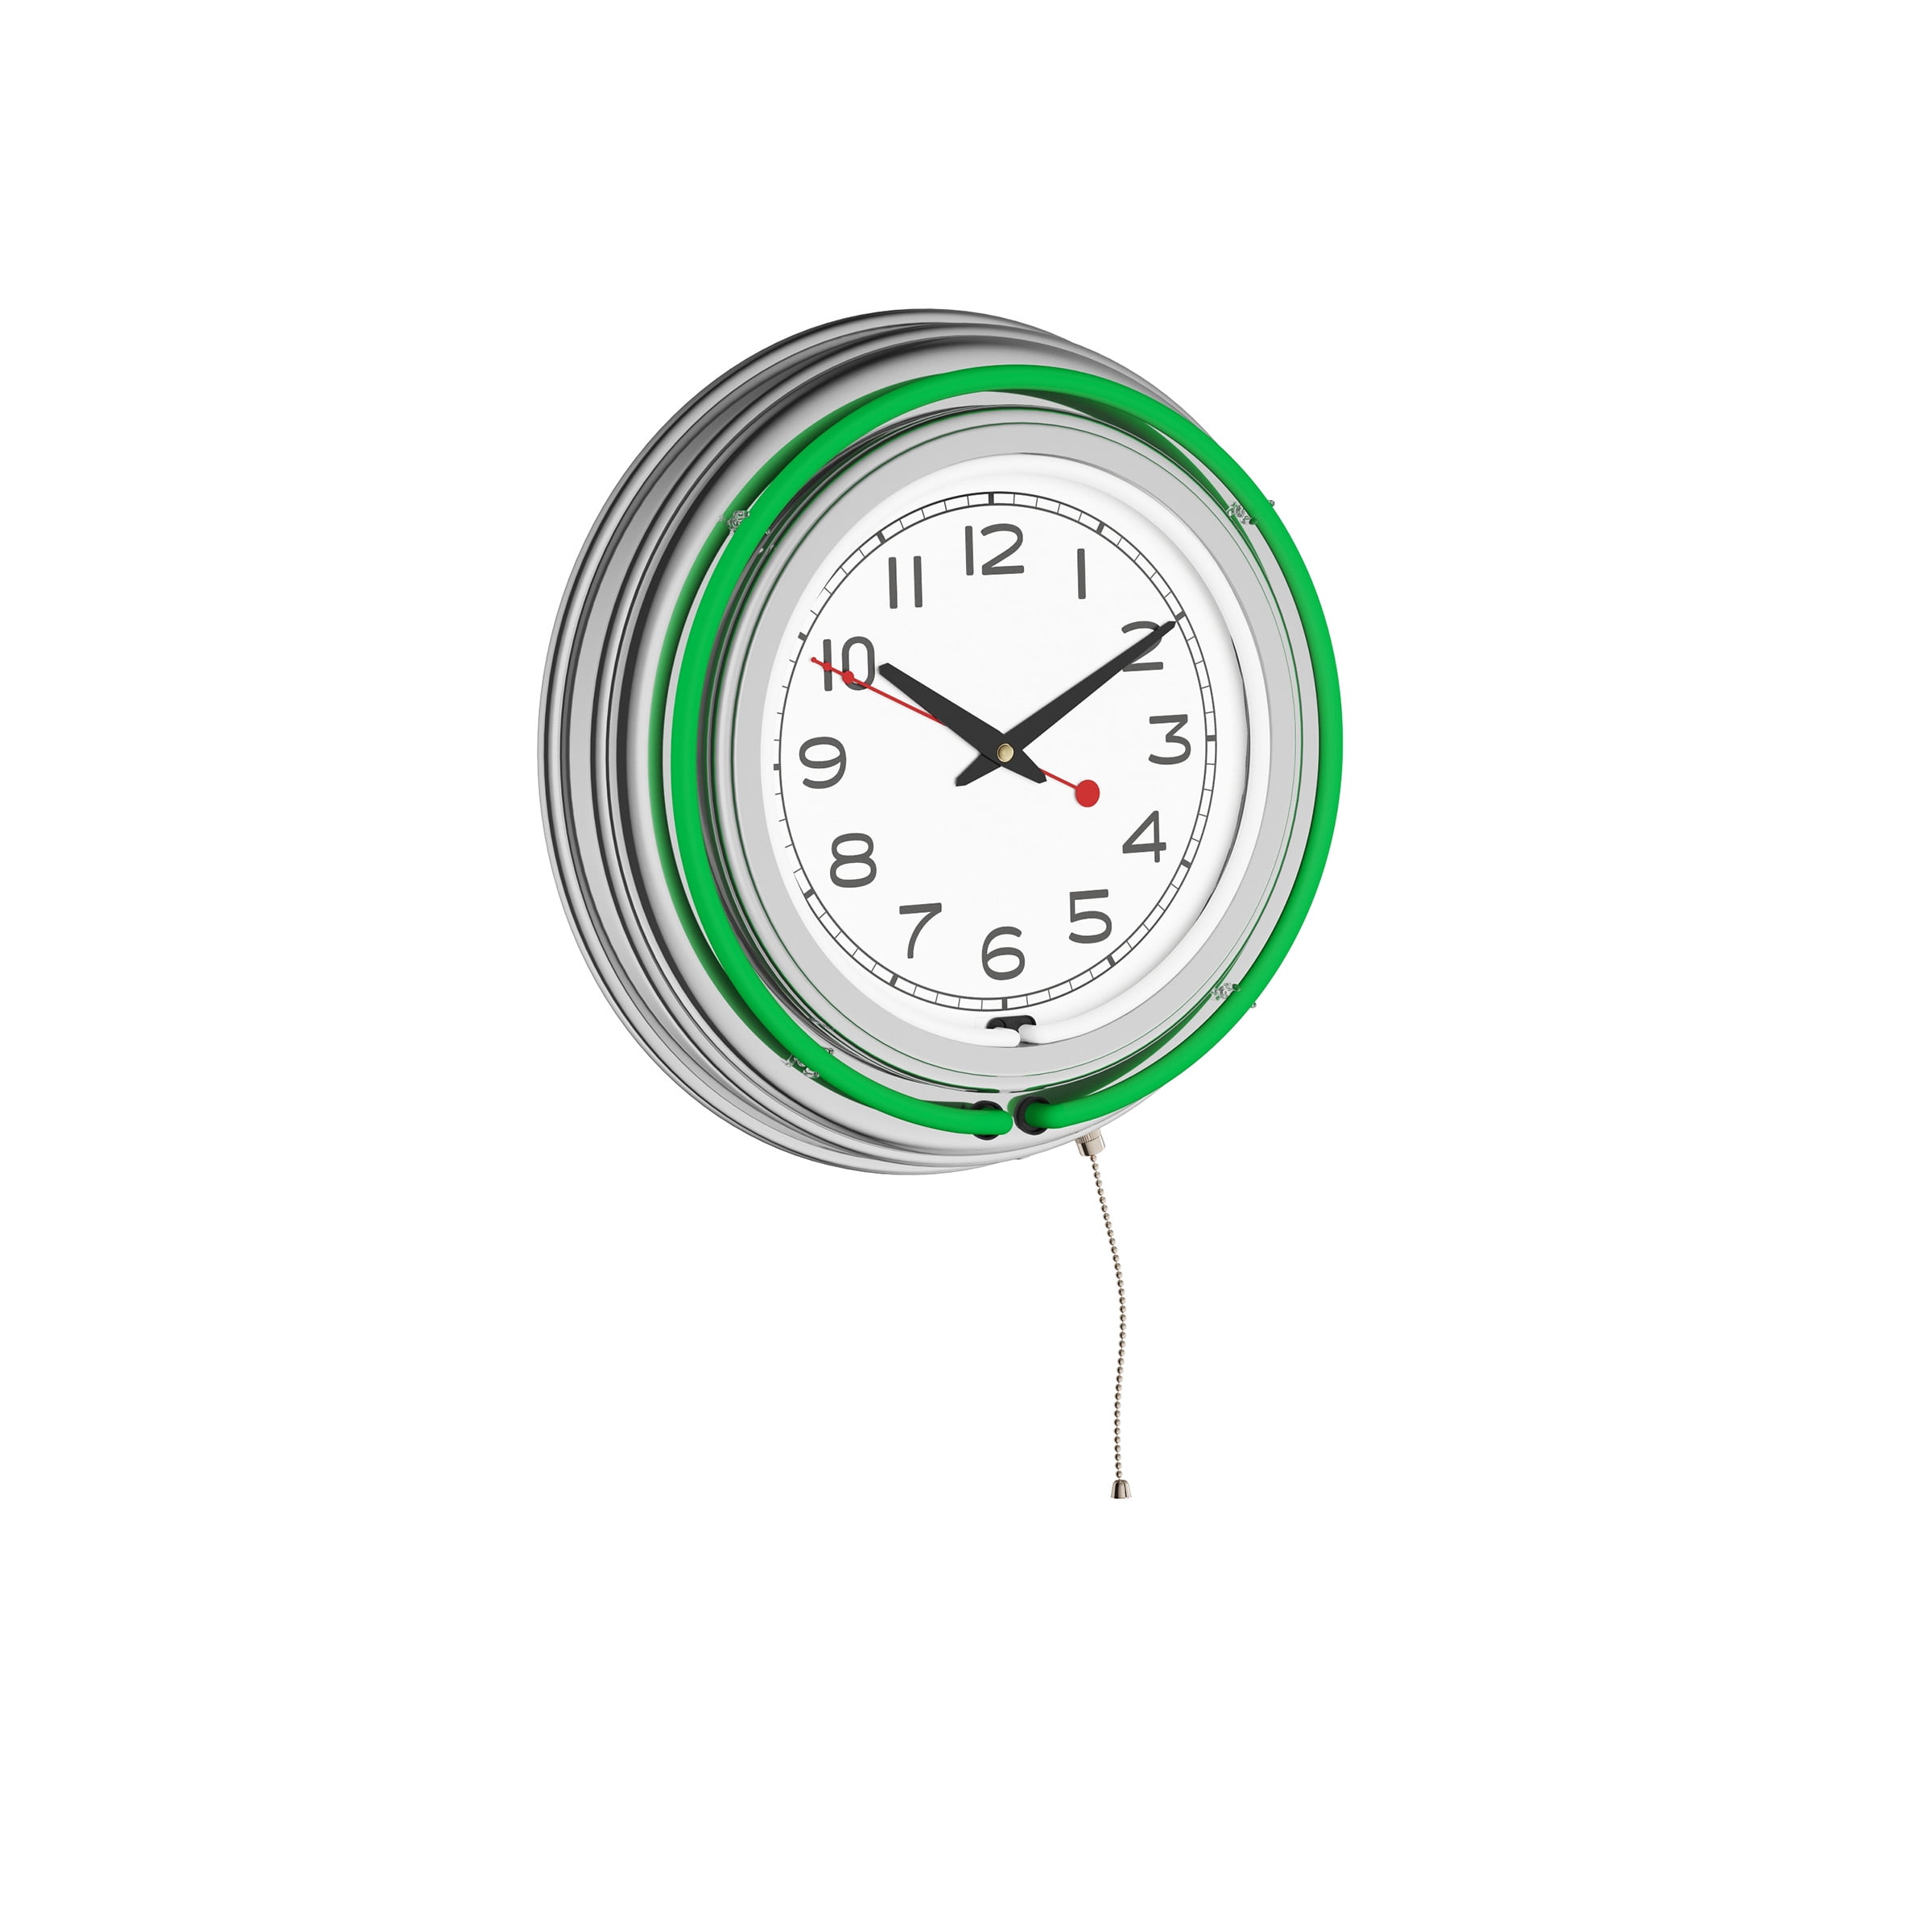 Double Light Ring Neon Wall Clock- 14” Round Green Analog Quartz Timepiece- Retro Decor for Bar Dual Power Garage & Game Room by Lavish Home